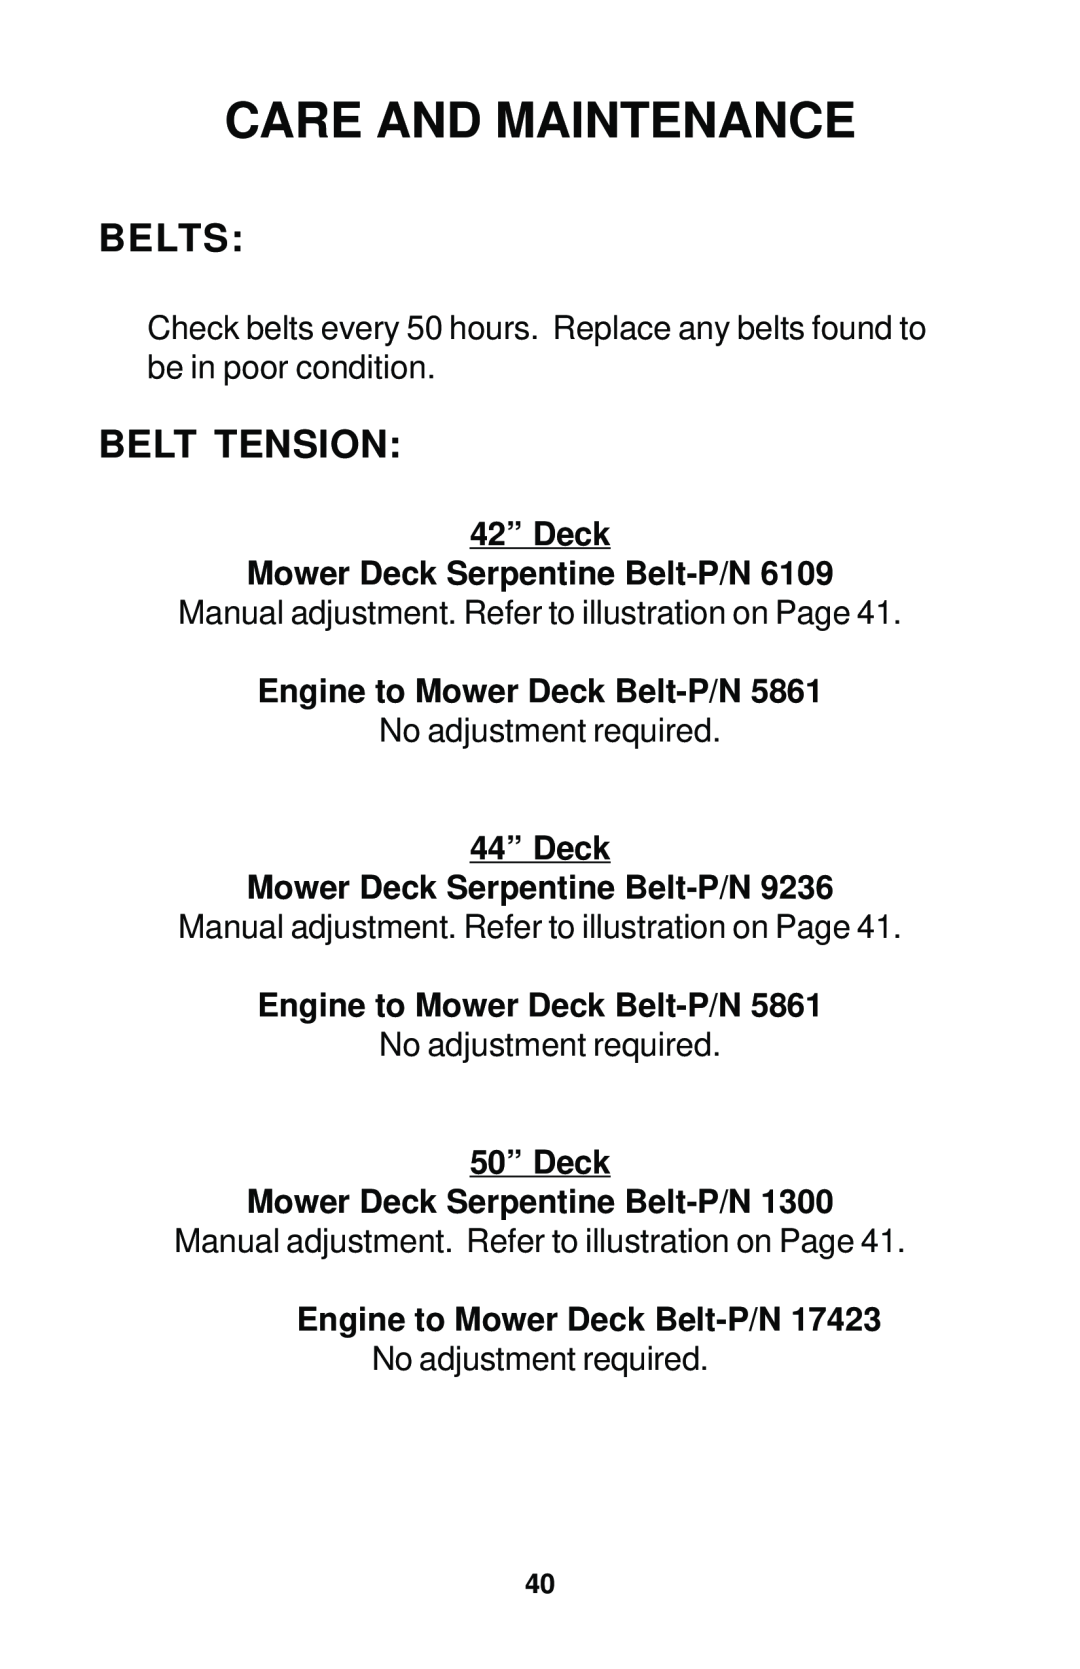 Dixon 17823-0704 manual Belts, Belt Tension, Care And Maintenance 